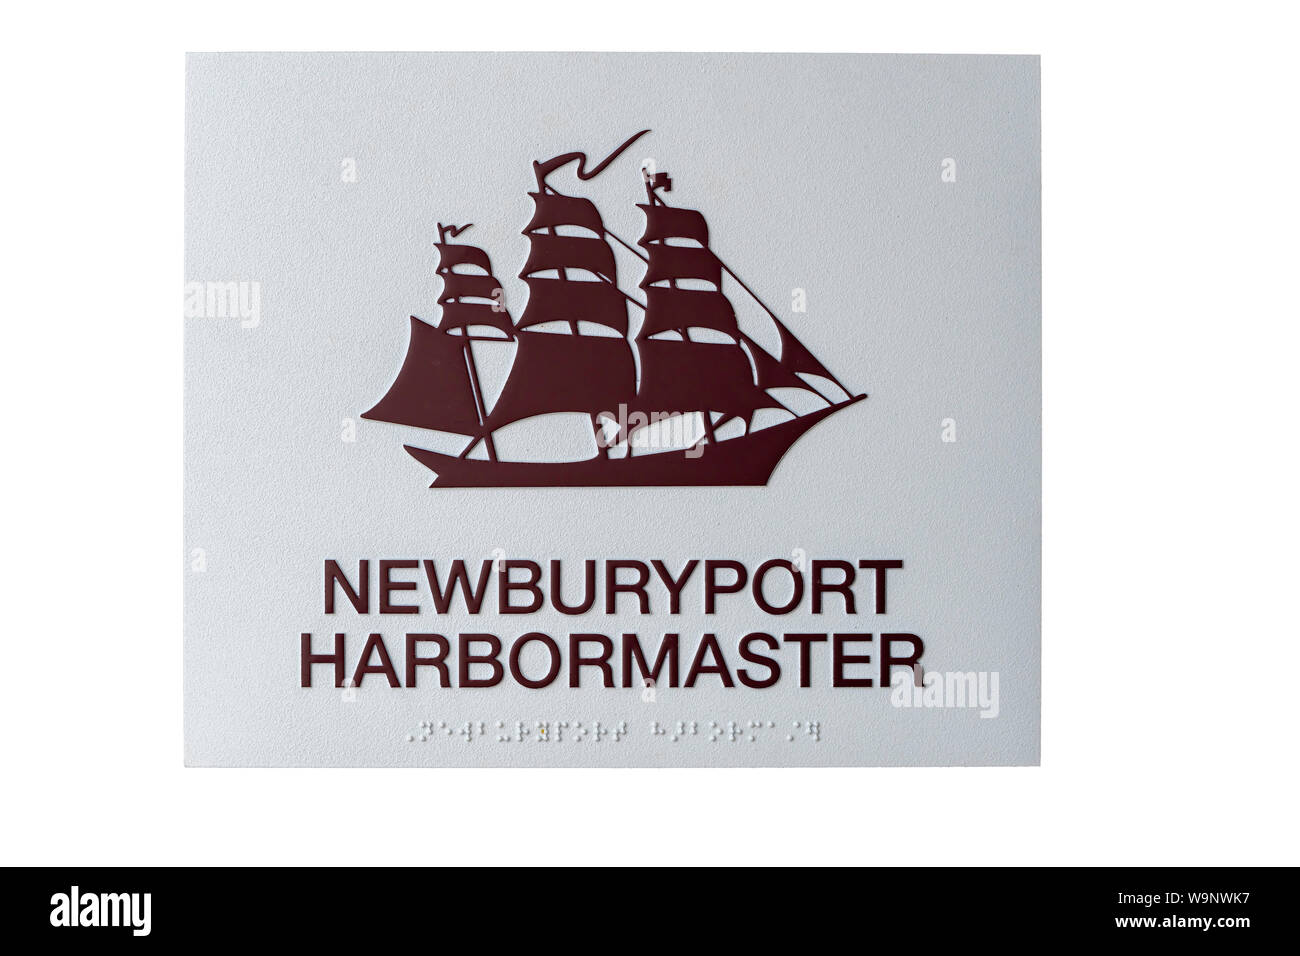 Newburyport, Massachusetts. 8/01/2019. Newburyport harbormaster sign isolated on white Banque D'Images